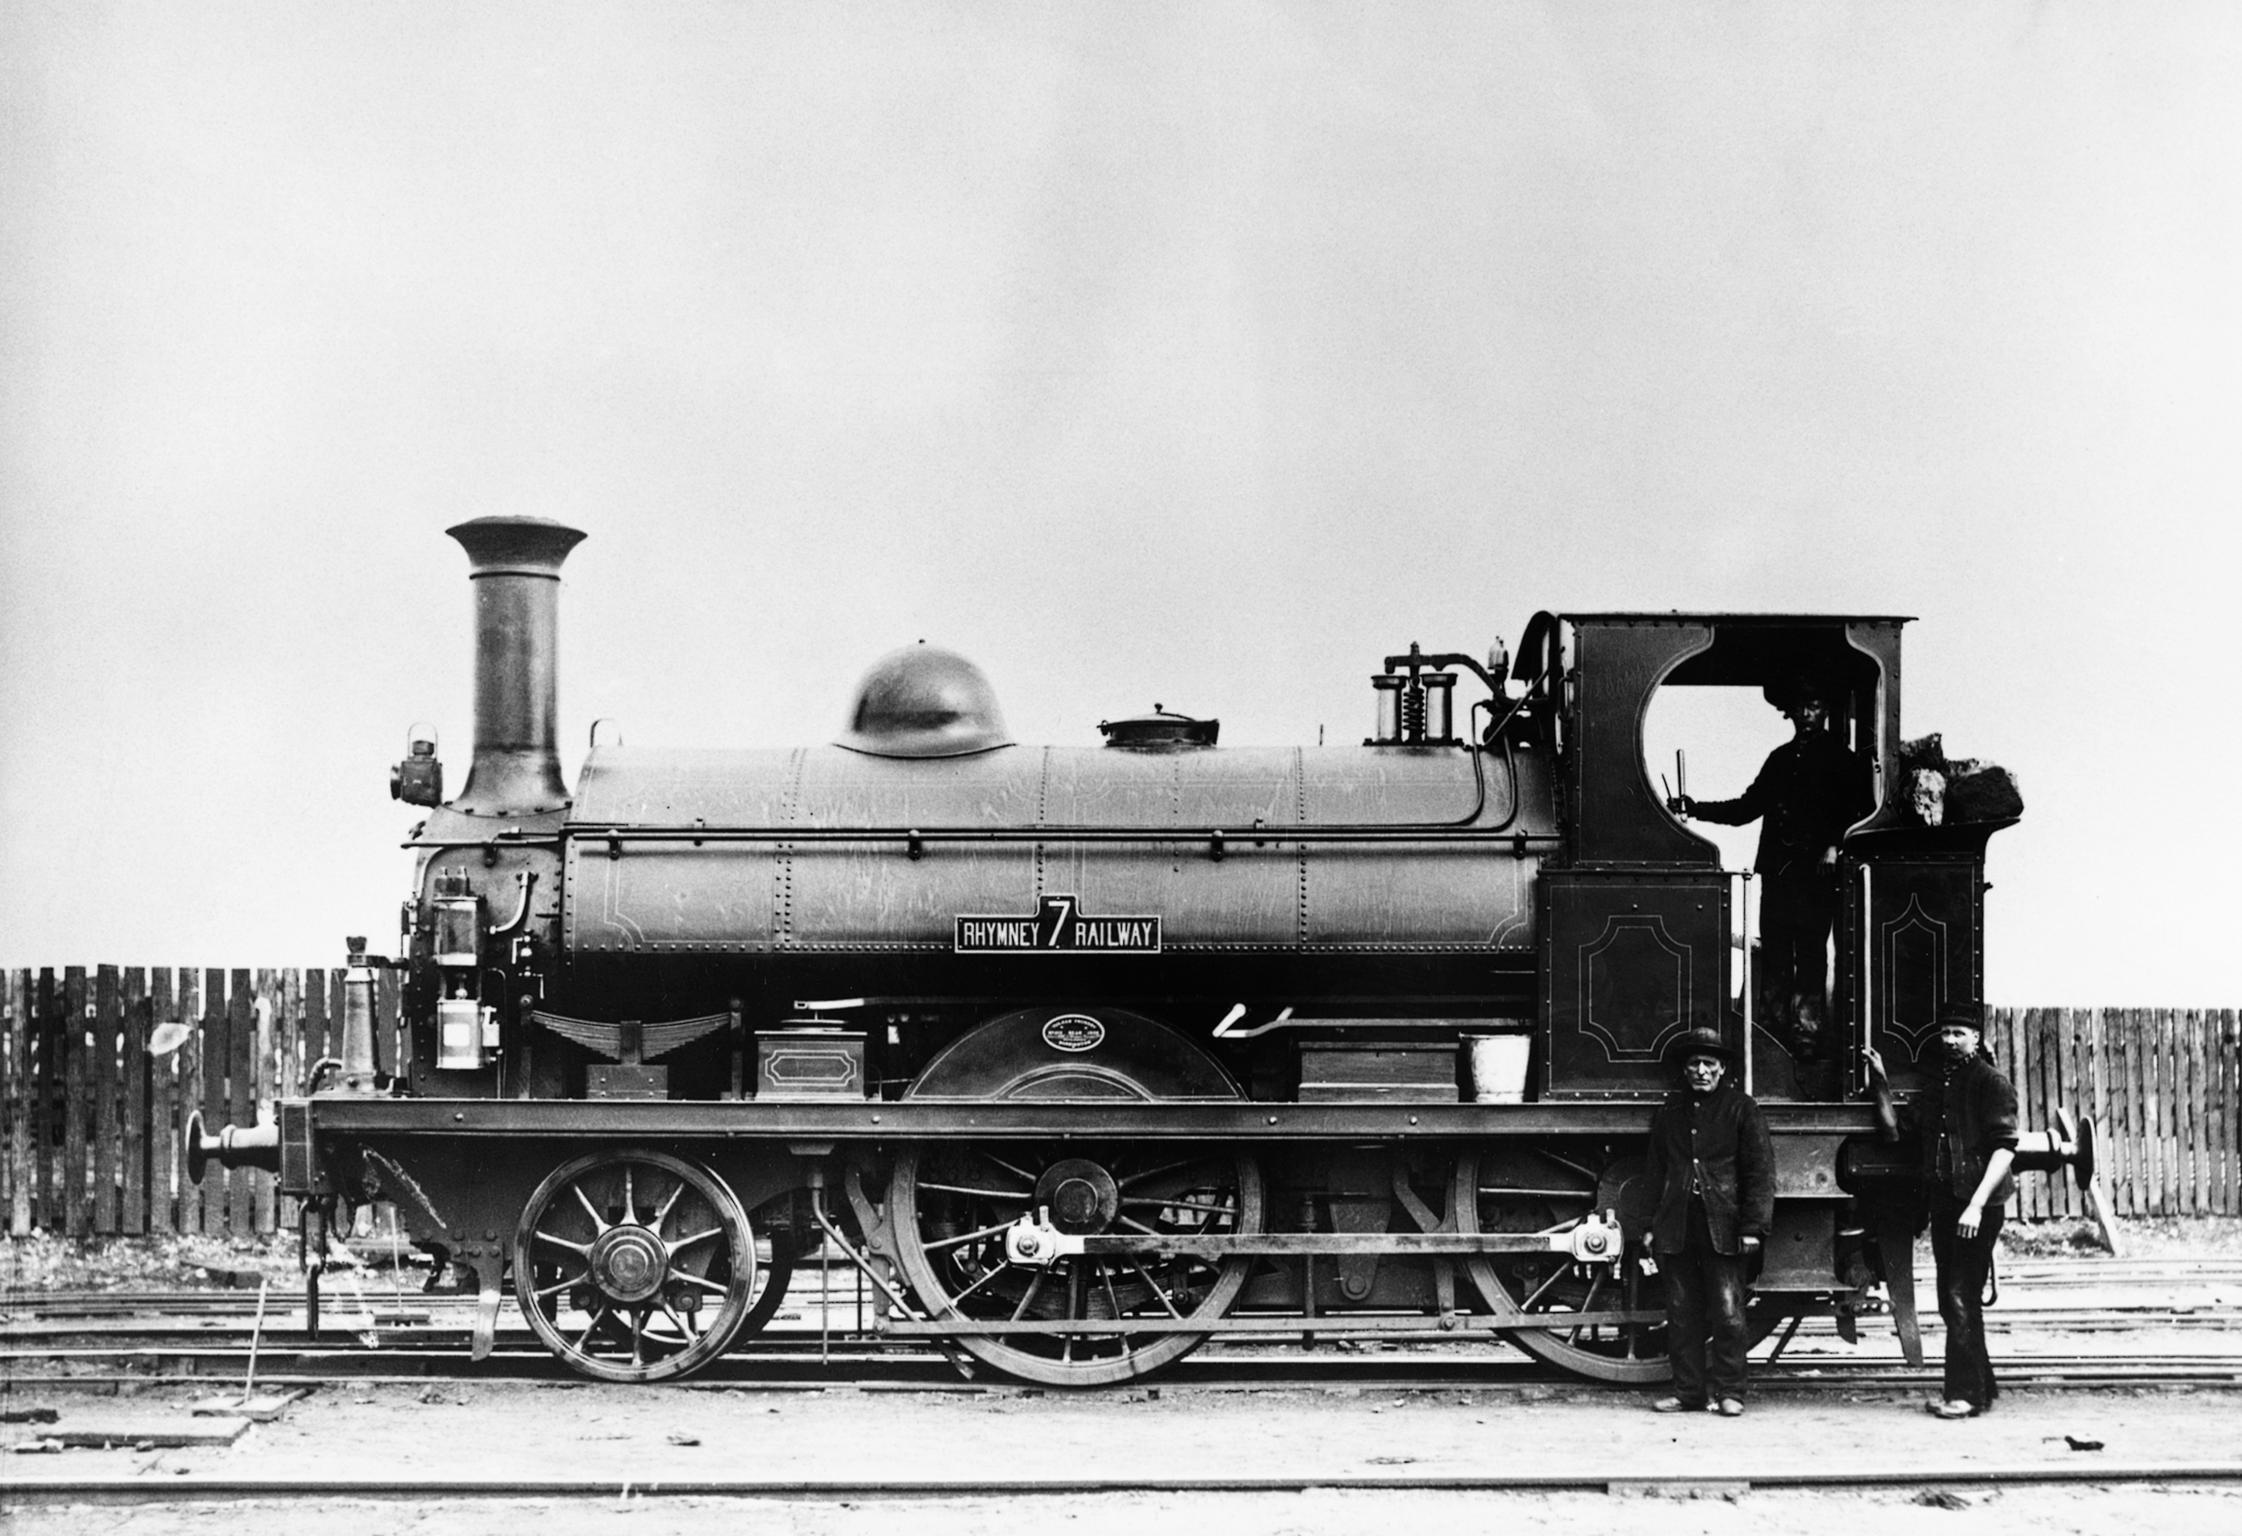 Rhymney Railway locomotive, photograph